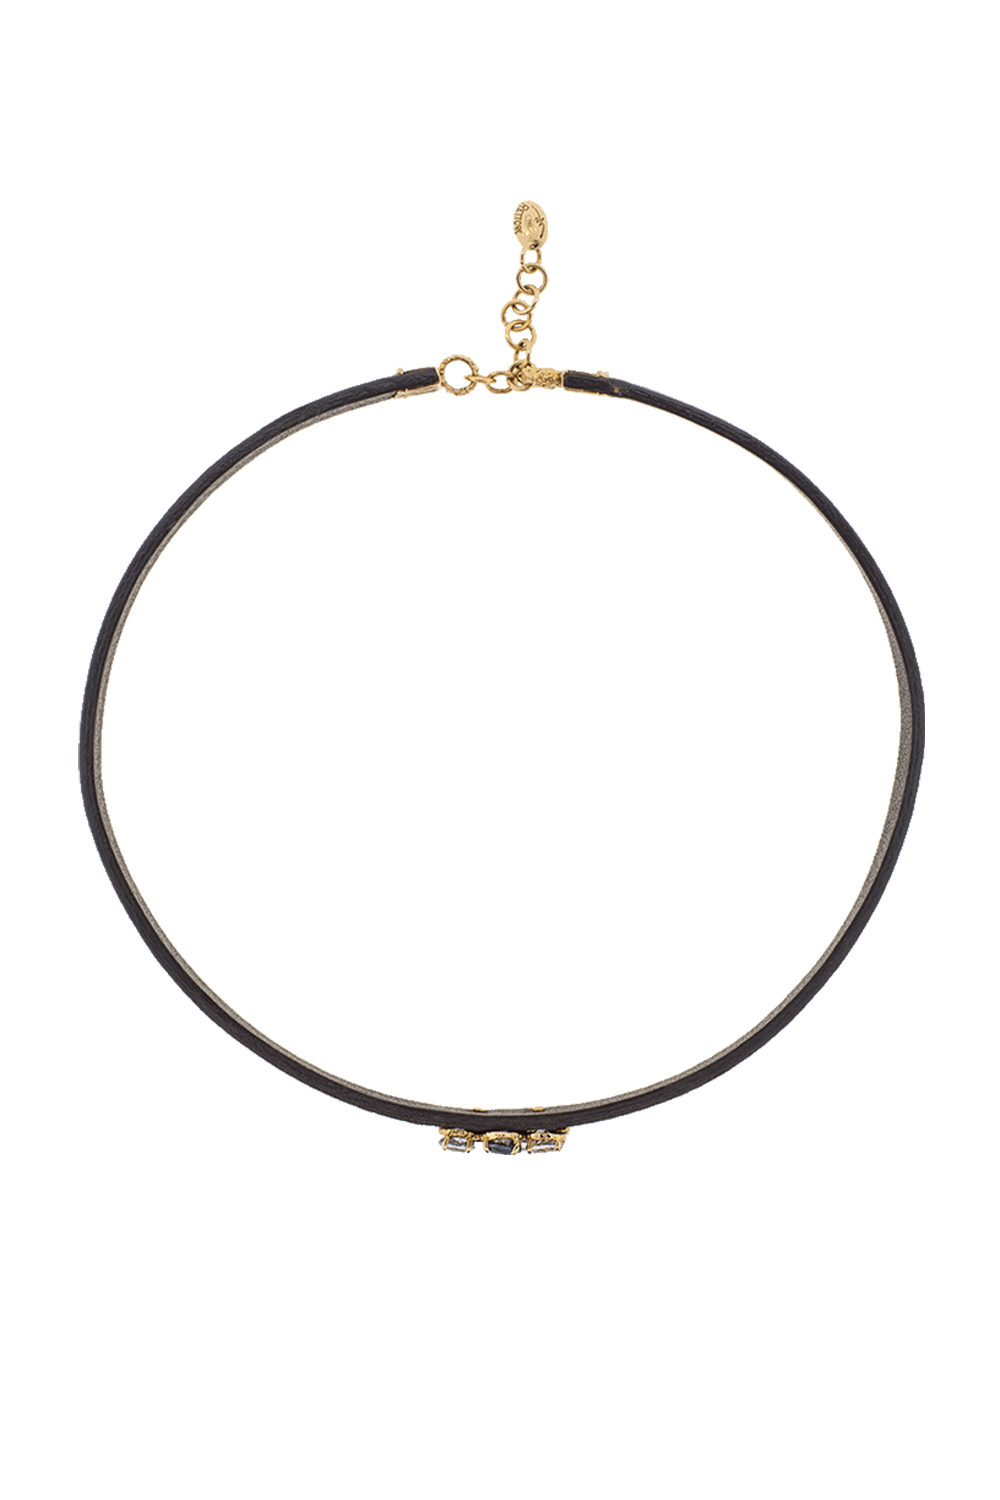 FEDERICA RETTORE-Brilliant Cut Sapphire Leather Wrap Bracelet-ROSE GOLD